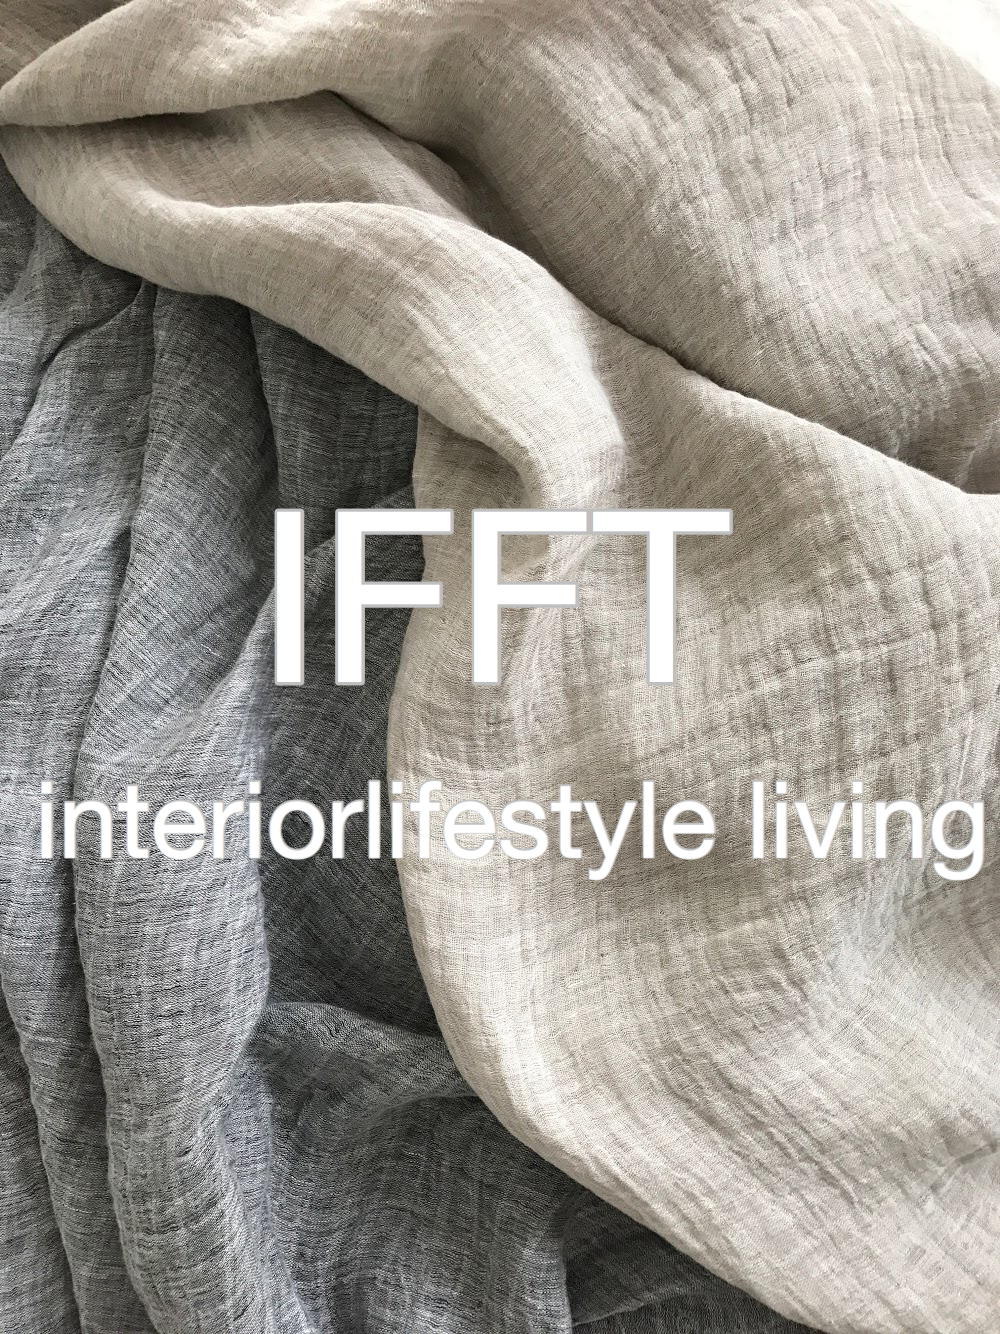 IFFT  interiorlifestyle living 出展のお知らせ